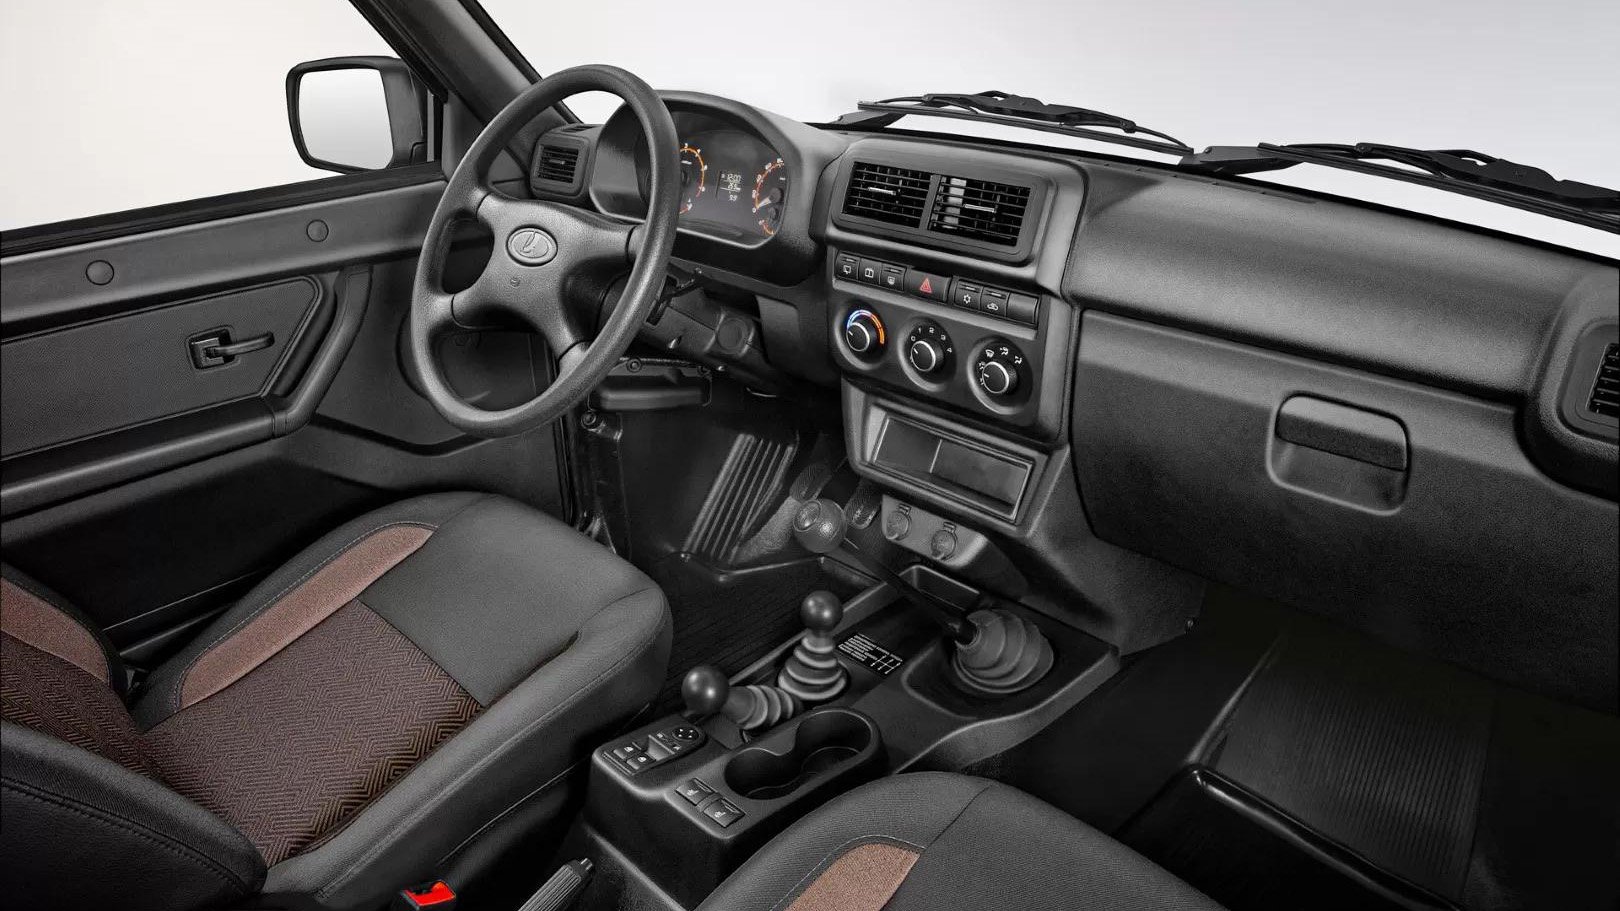 Lada Niva interior - Cockpit